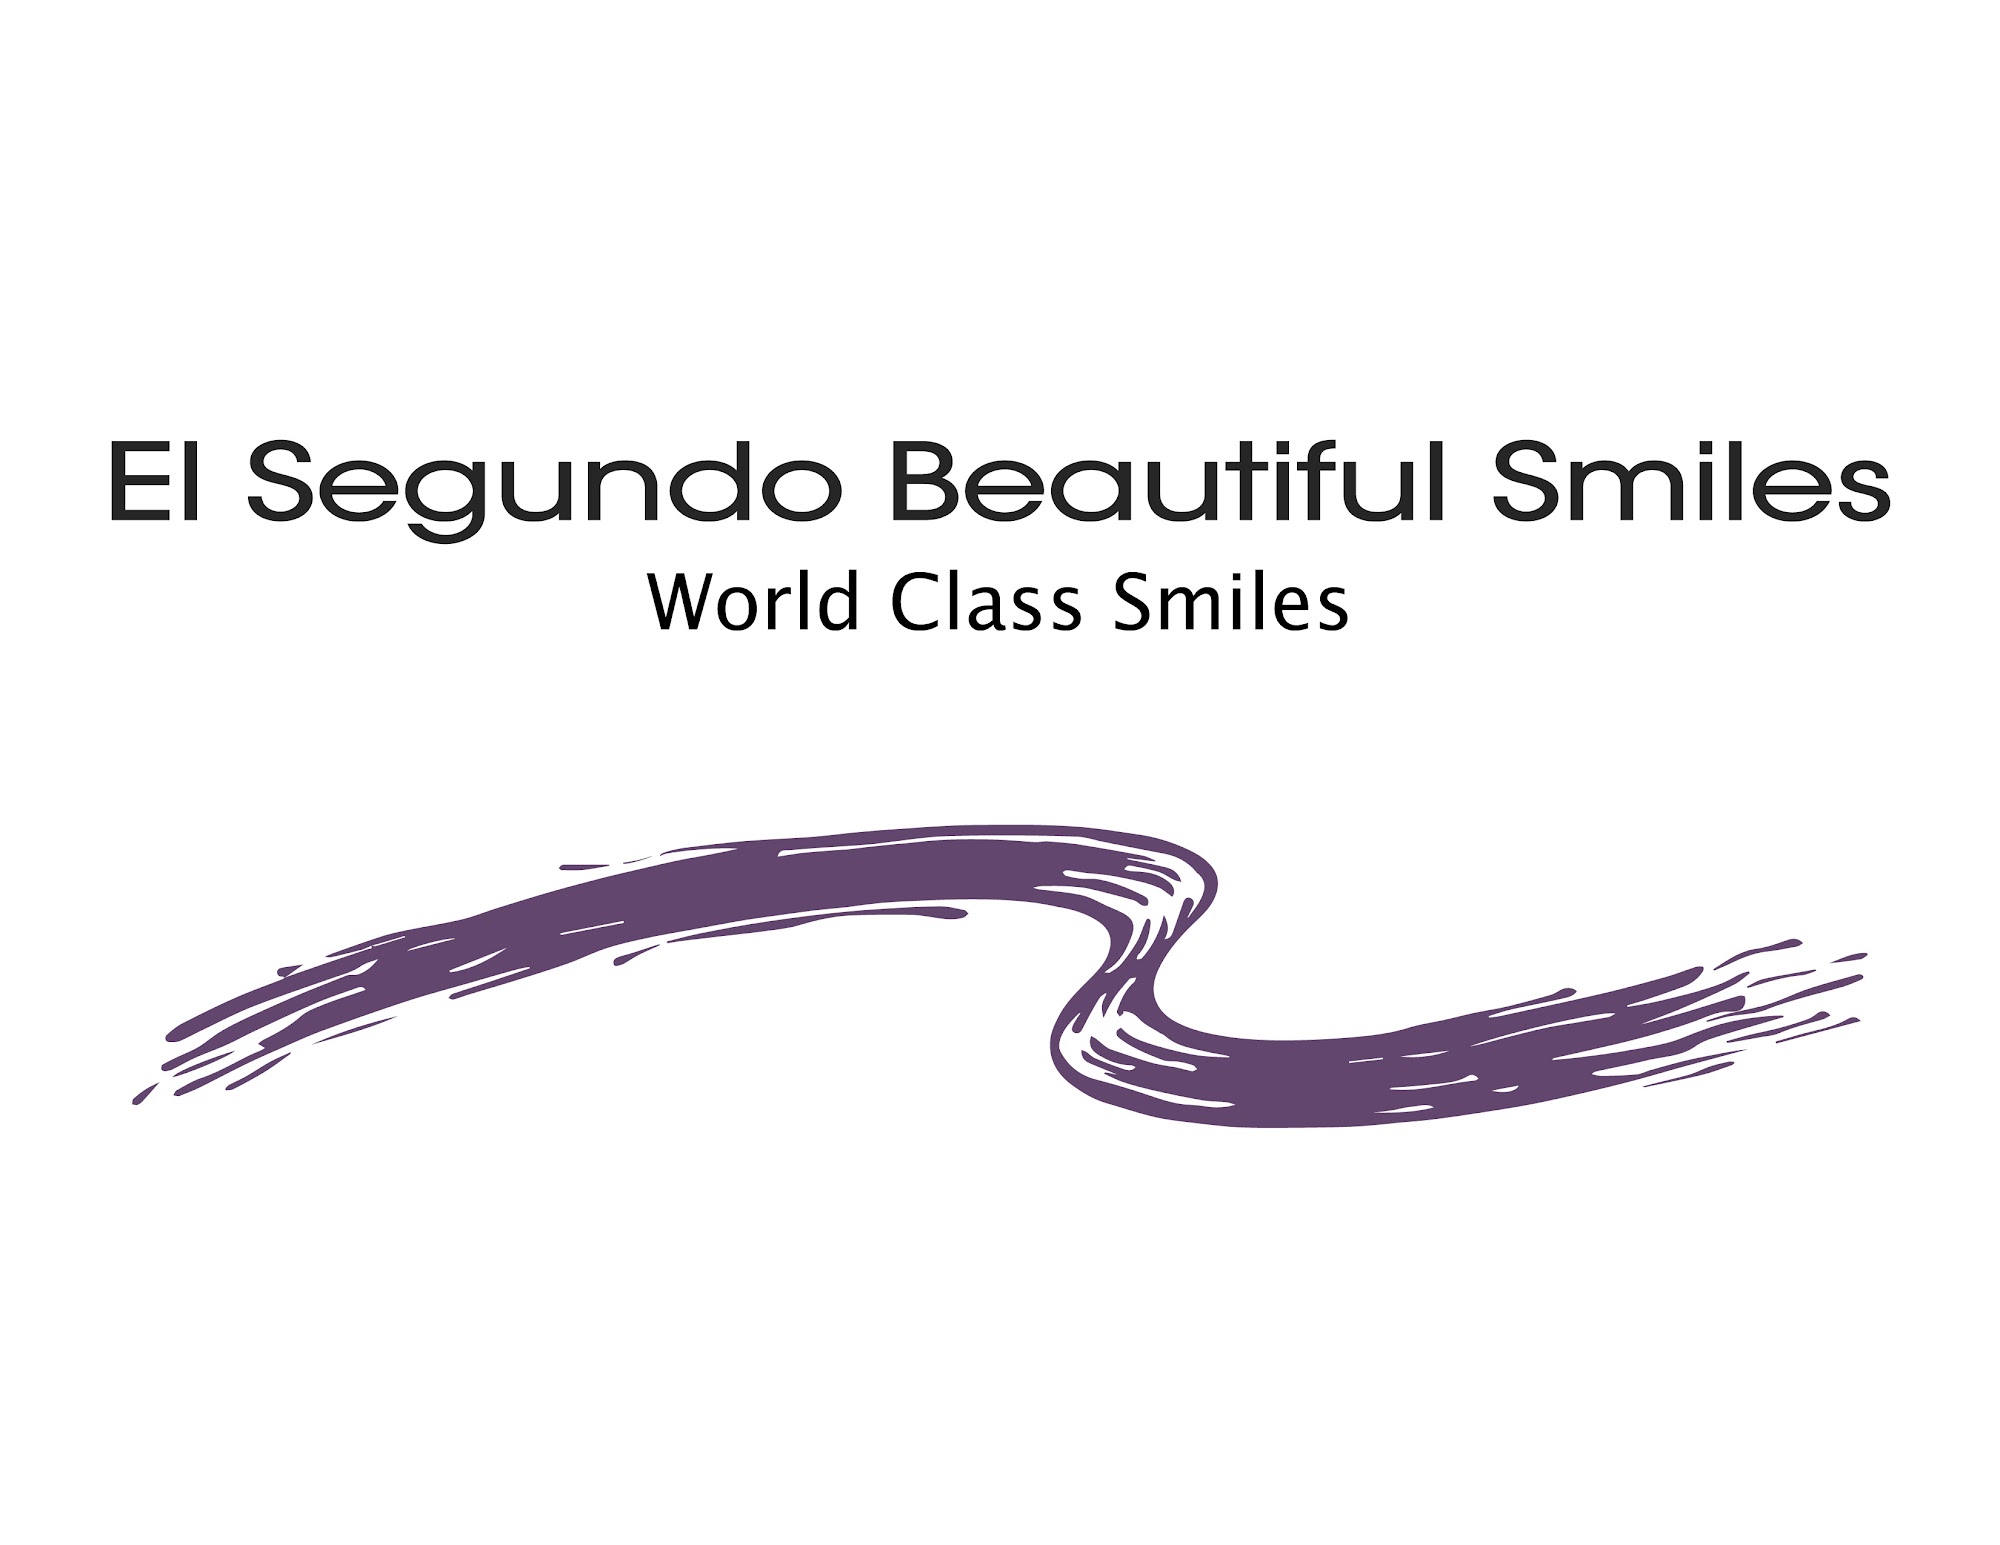 El Segundo Beautiful Smiles: Dr. Silvia Cardona and Dr. Cuong Nguyen